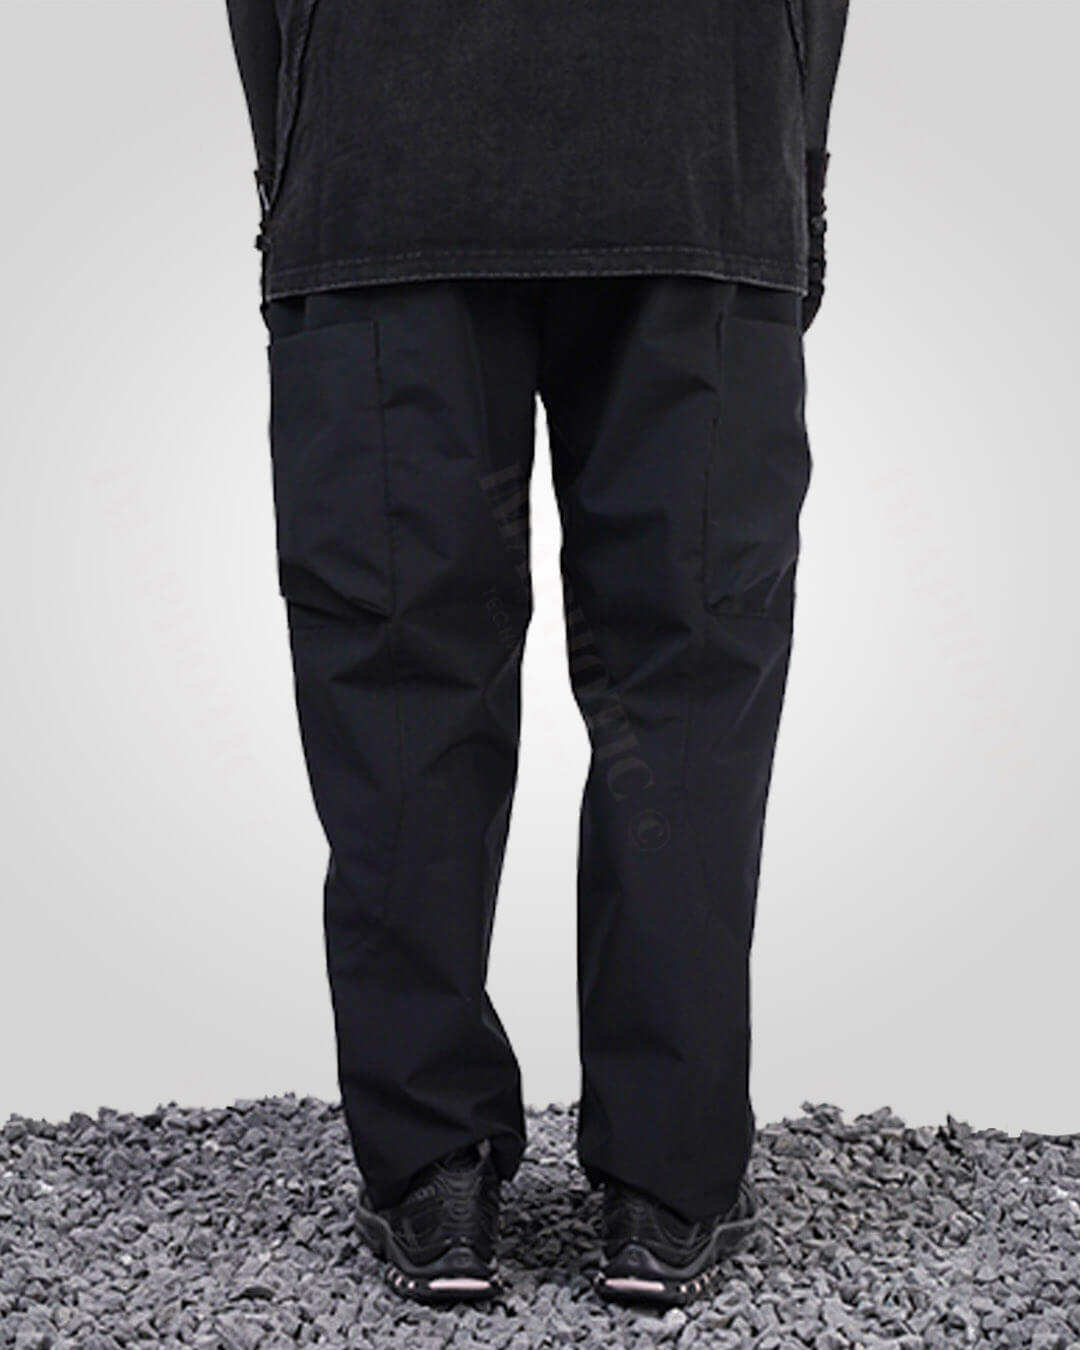 Versatile Black Baggy Cargo Pants - Tactical Waterproof & Stylish